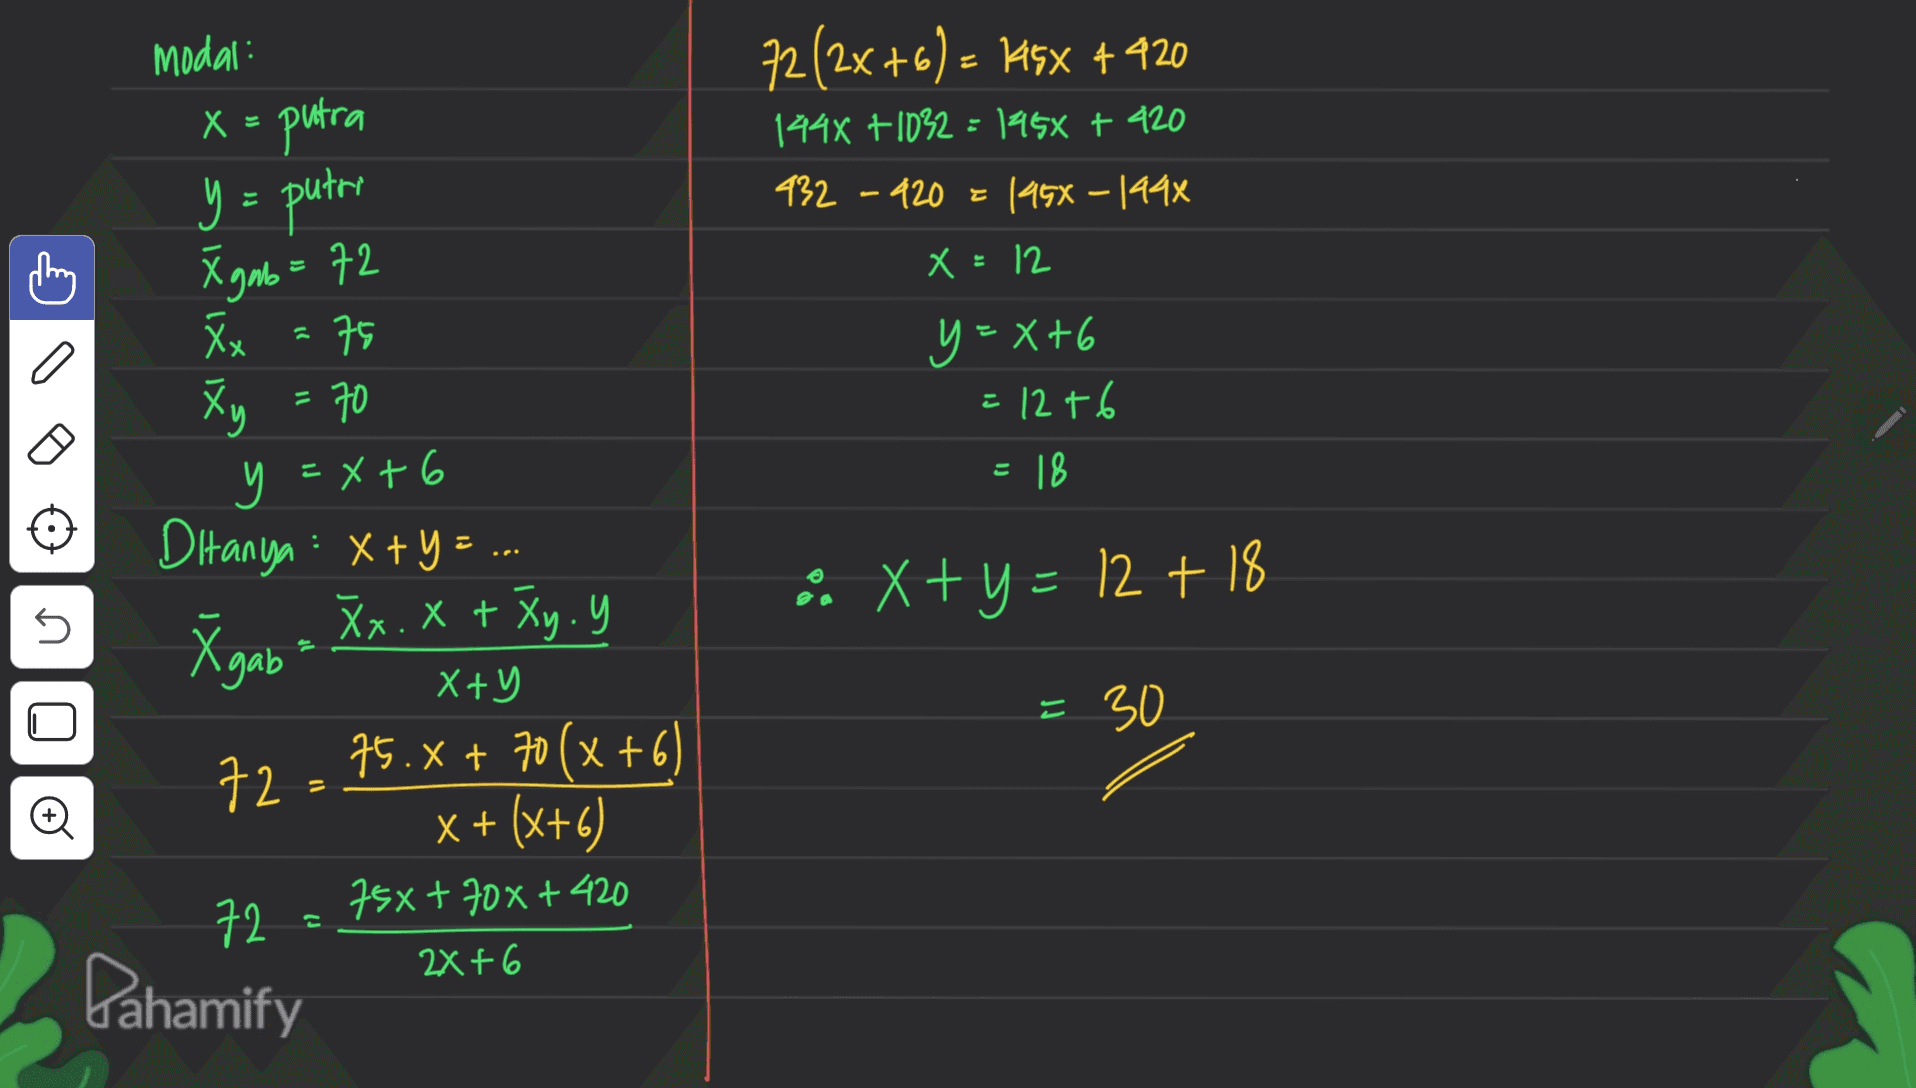 Modal x = putra y = putri x sixixix Xgab=72 72(2x+6) = 149x + 420 2x+6KGX 1444 +1032=1958 + 420 432 - 920 = 1958 - 1994 X =12 y=x+6 = 12 +6 18 a 75 = 70 E y =x+6 és X + y = 12 + 18 n Ditanya : x+y=.. Xx.x + xy. y X gab X+Y ( x + (x+6) 72 75x+708 +420 E 30 72. 75.x + 70(x+6) 2x+6 Pahamify 